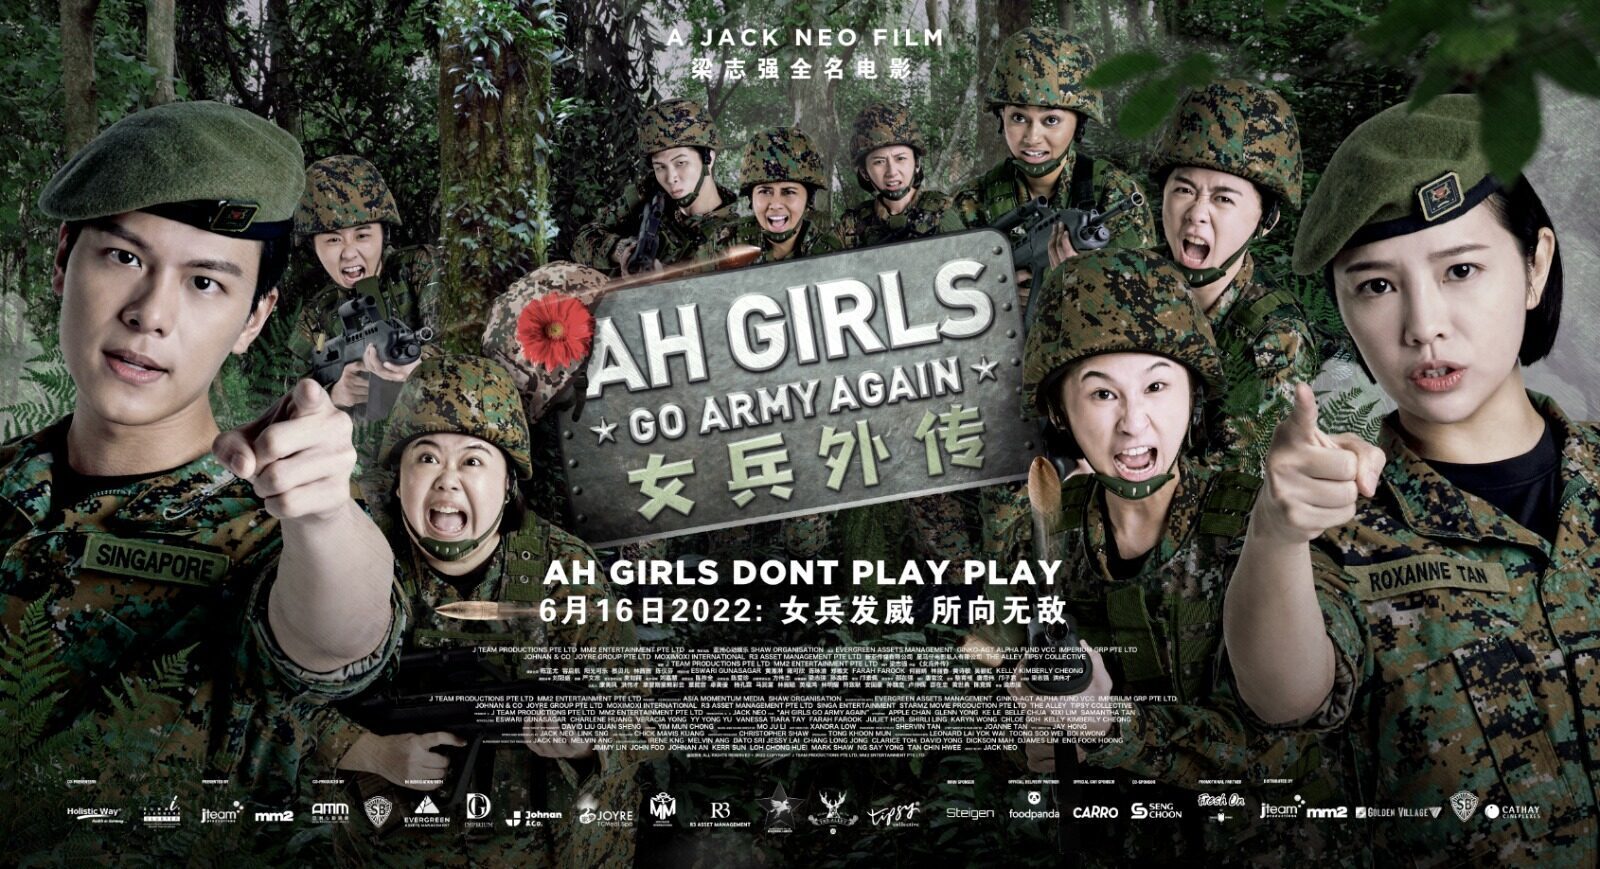 cropped-cropped-cropped-ah-girls-go-army-again-1.jpg